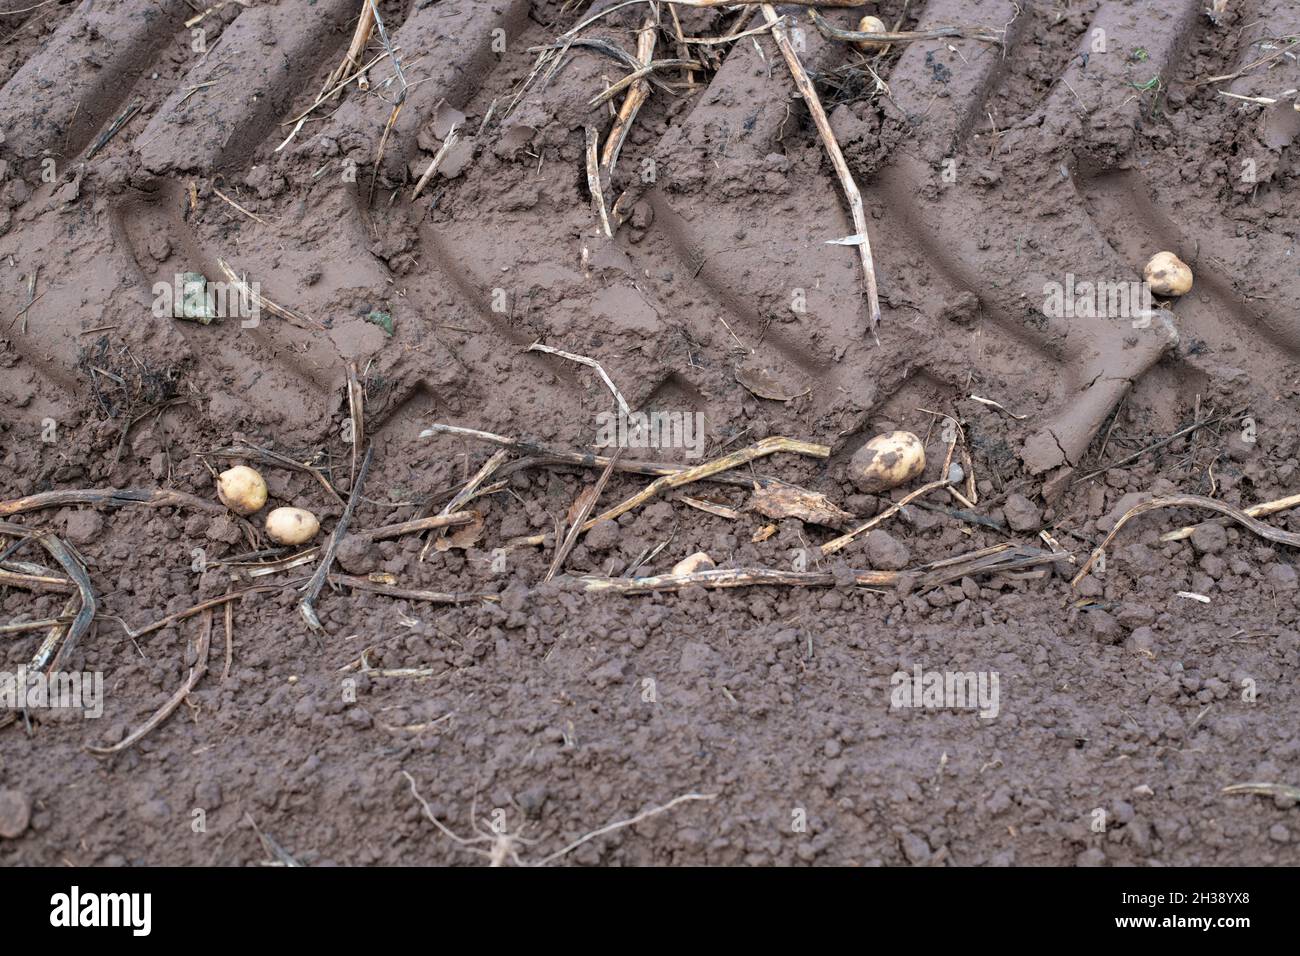 potato waste - potato tubers left behind in field after mechanical potato harvesting - Scotland, UK Stock Photo